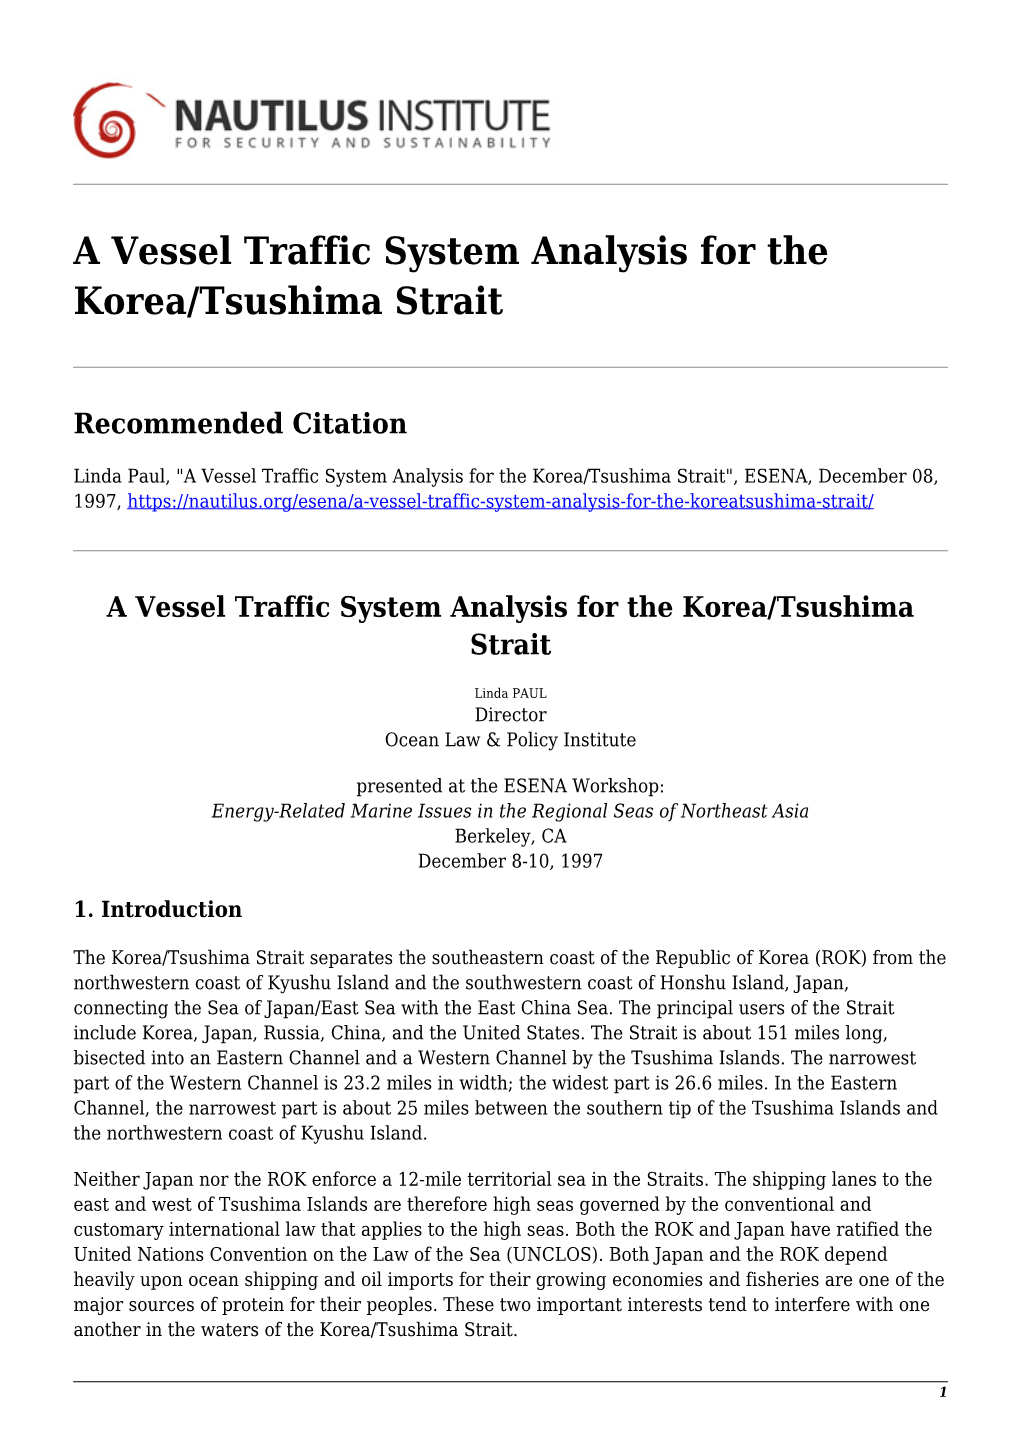 A Vessel Traffic System Analysis for the Korea/Tsushima Strait